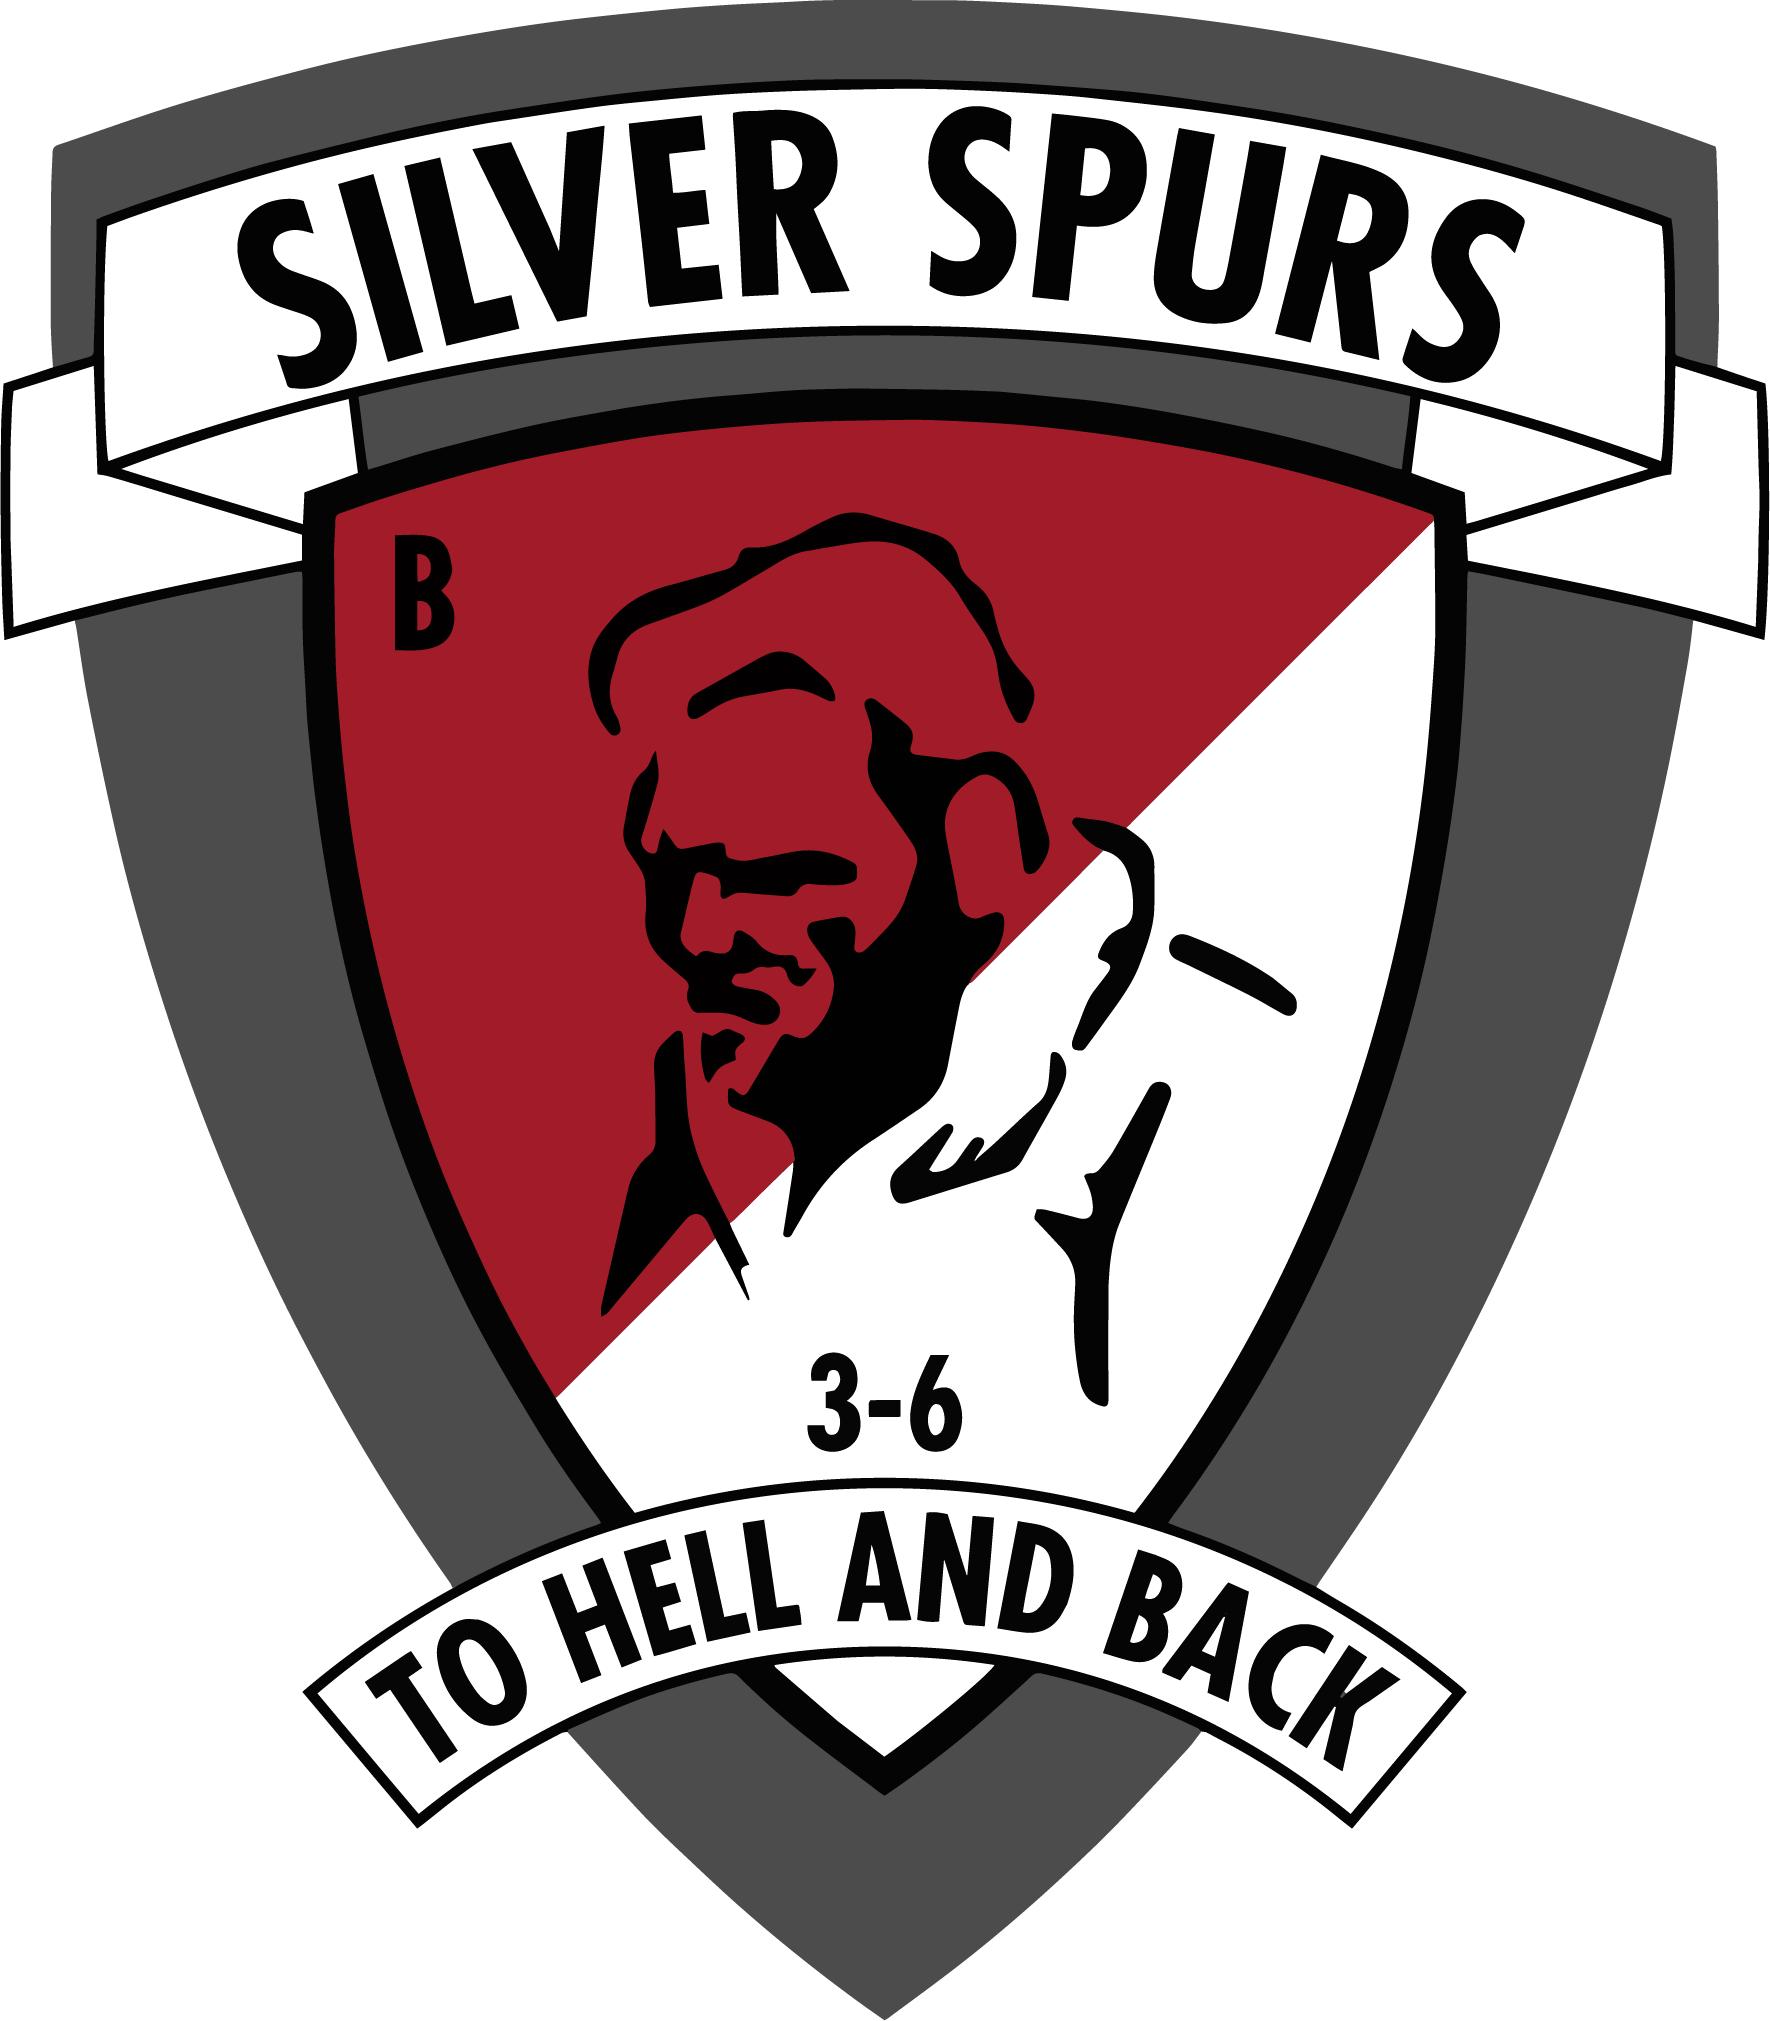 B Troop, 3-6 ACS "Silver Spurs"